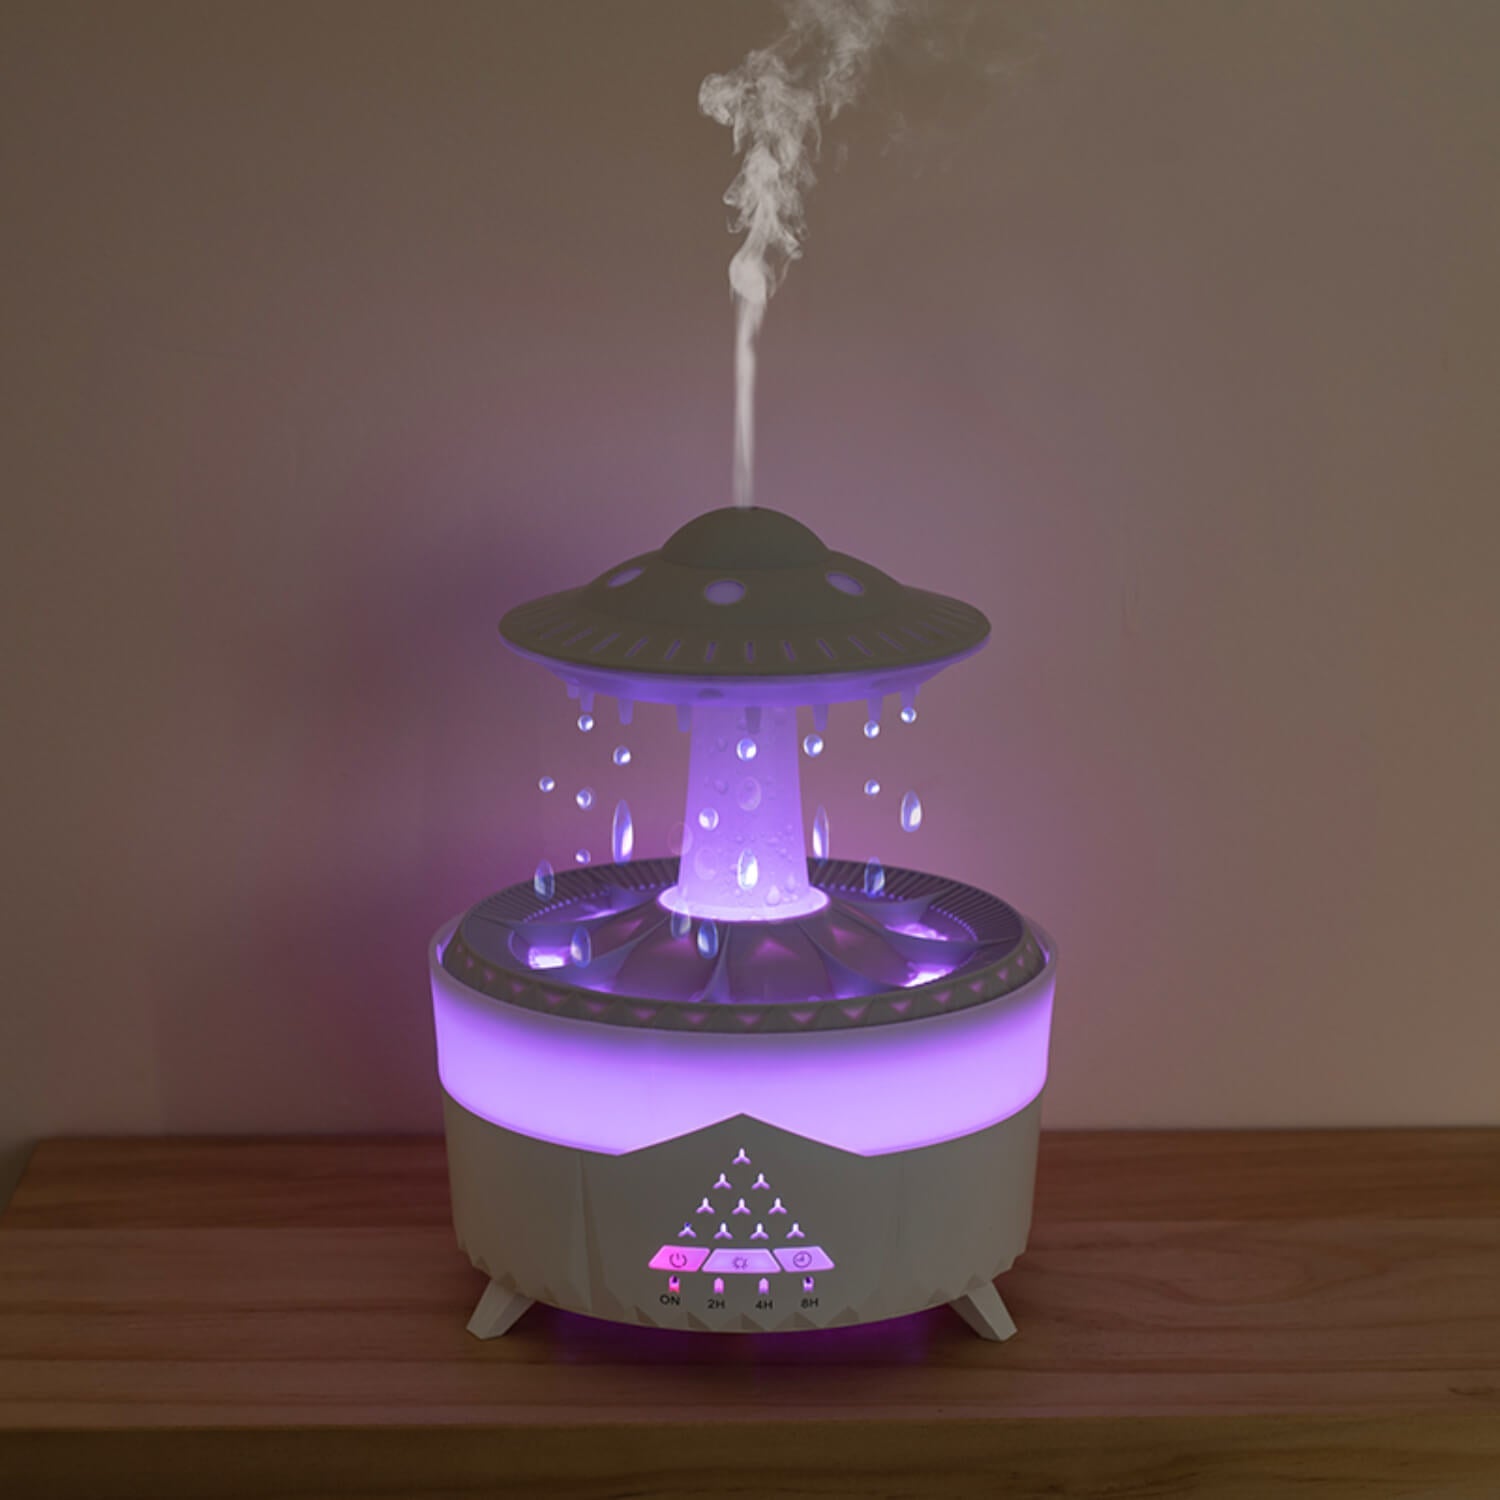 UFO Raindrop Diffuser - Enchanting Aromatherapy Experience.